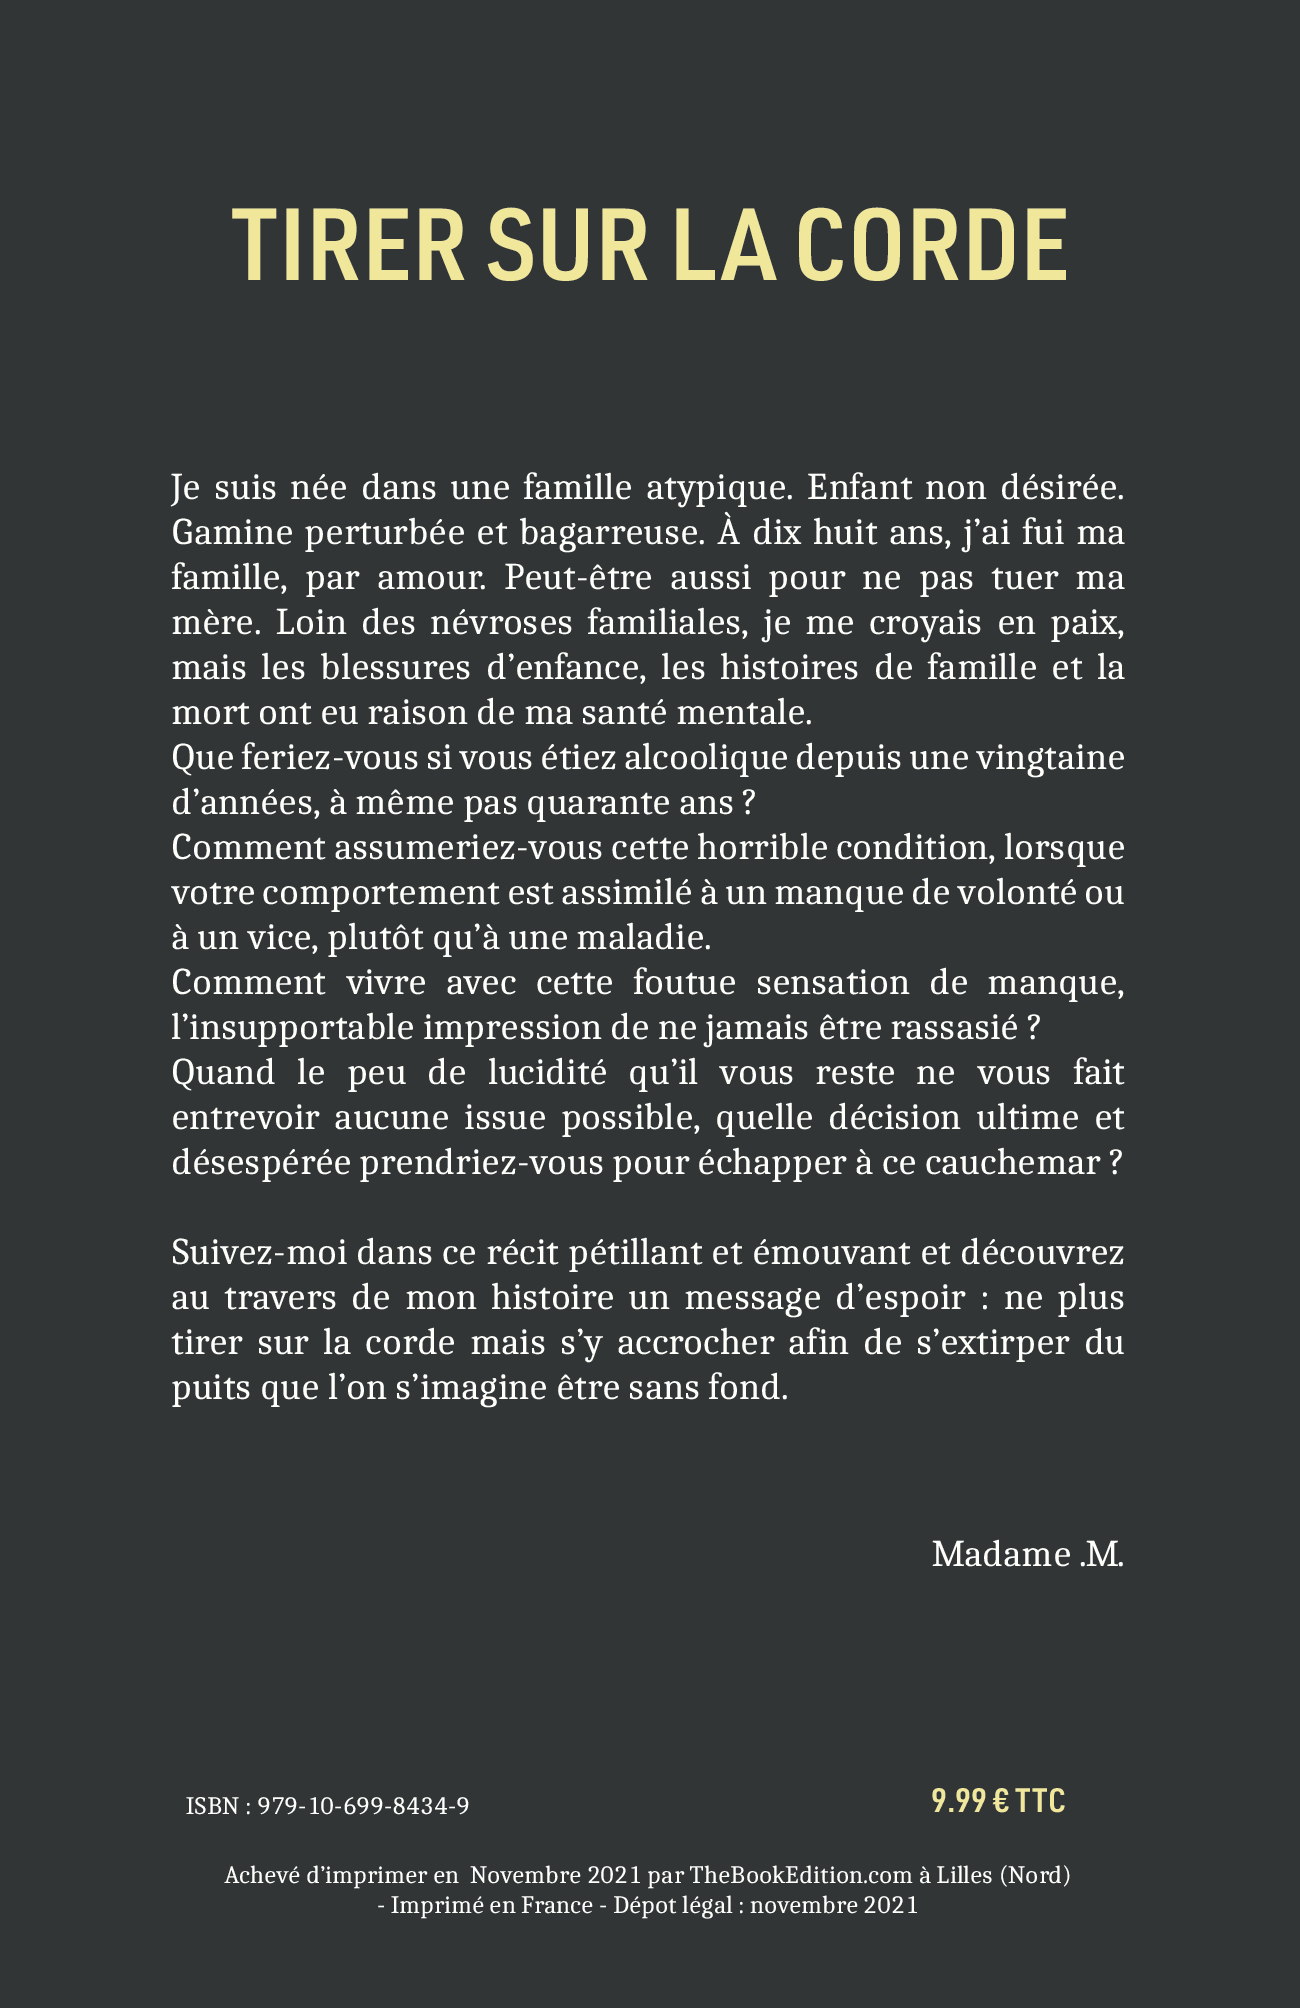 TIRER SUR LA CORDE - ebook (ePub) - Madame M. - Achat ebook